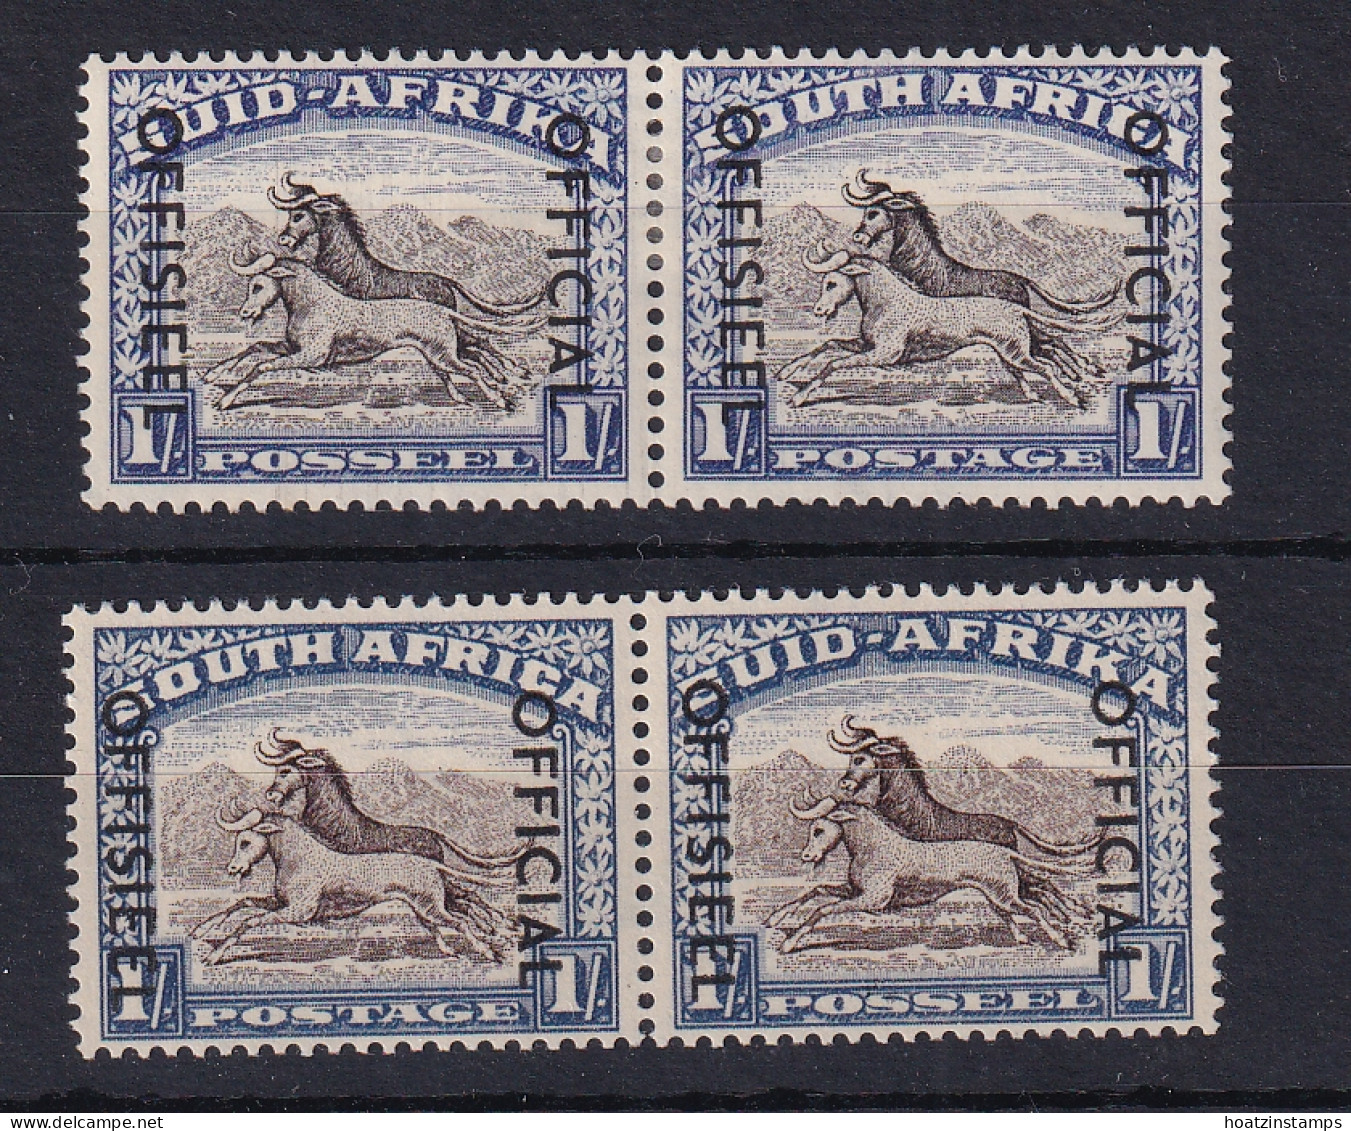 South Africa: 1950/54   Official - Wildebeest   SG O47 / O47a   1/-    MH Pair - Dienstzegels